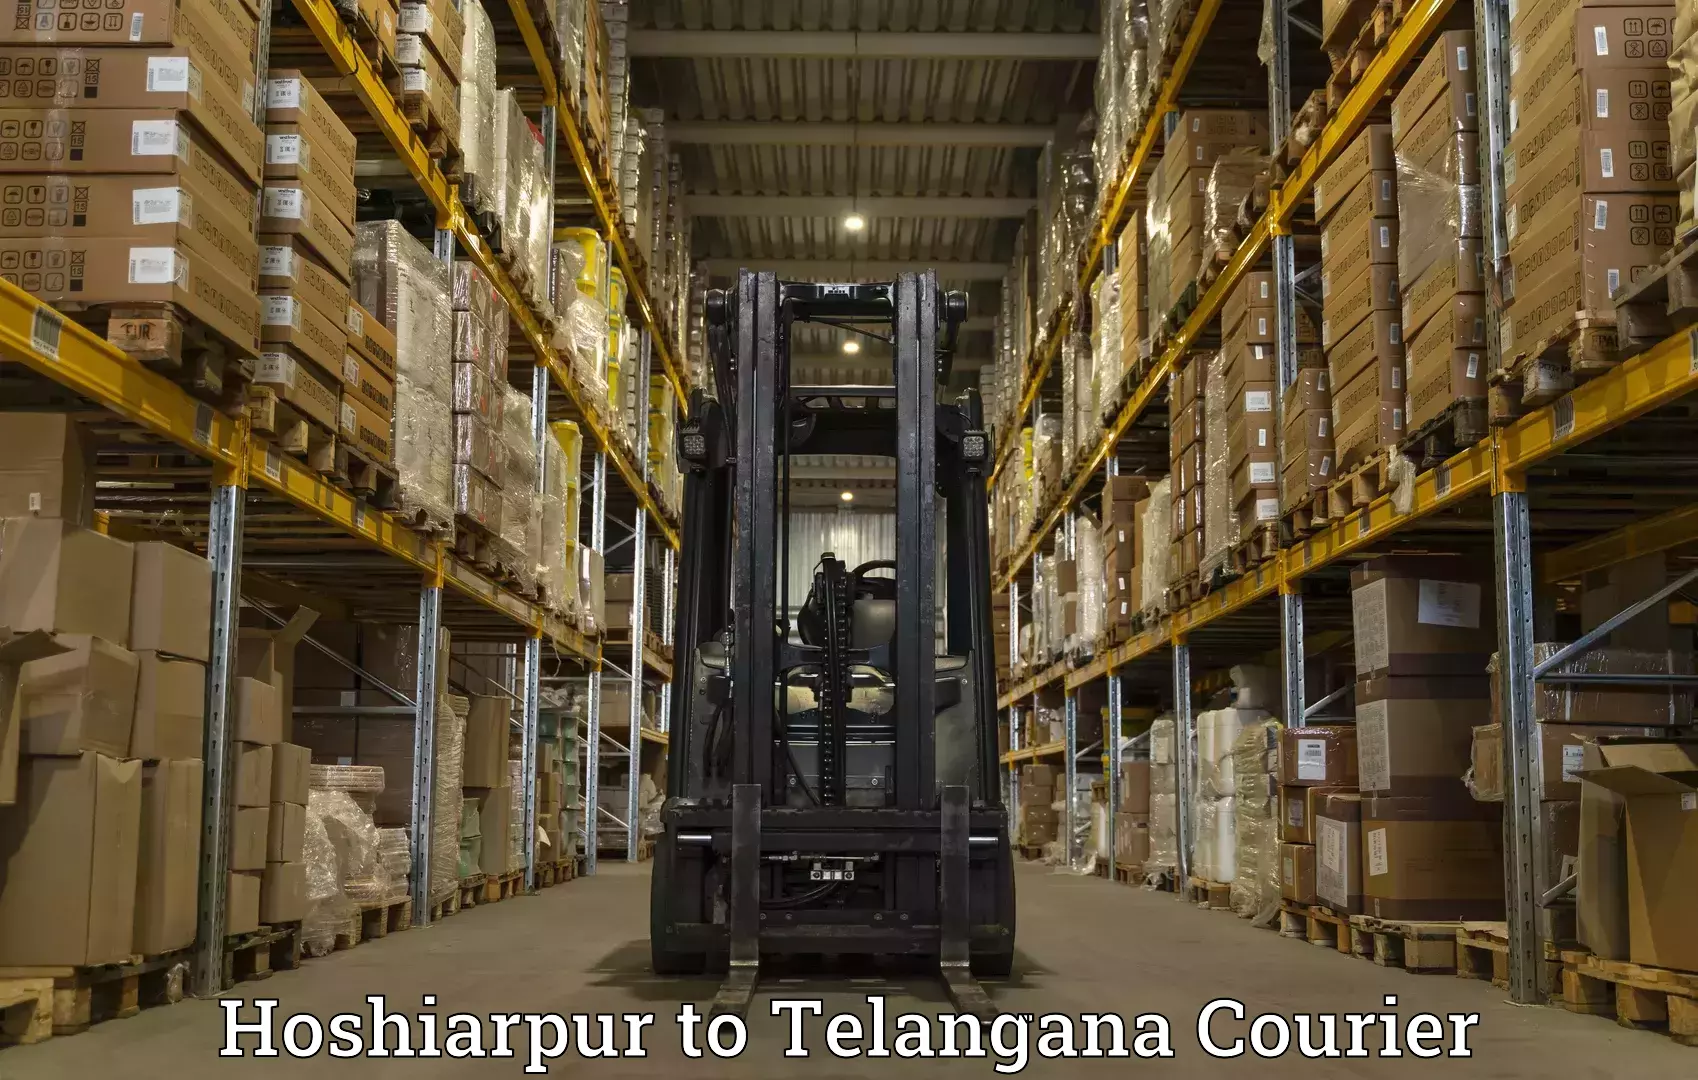 Global logistics network Hoshiarpur to Kodimial